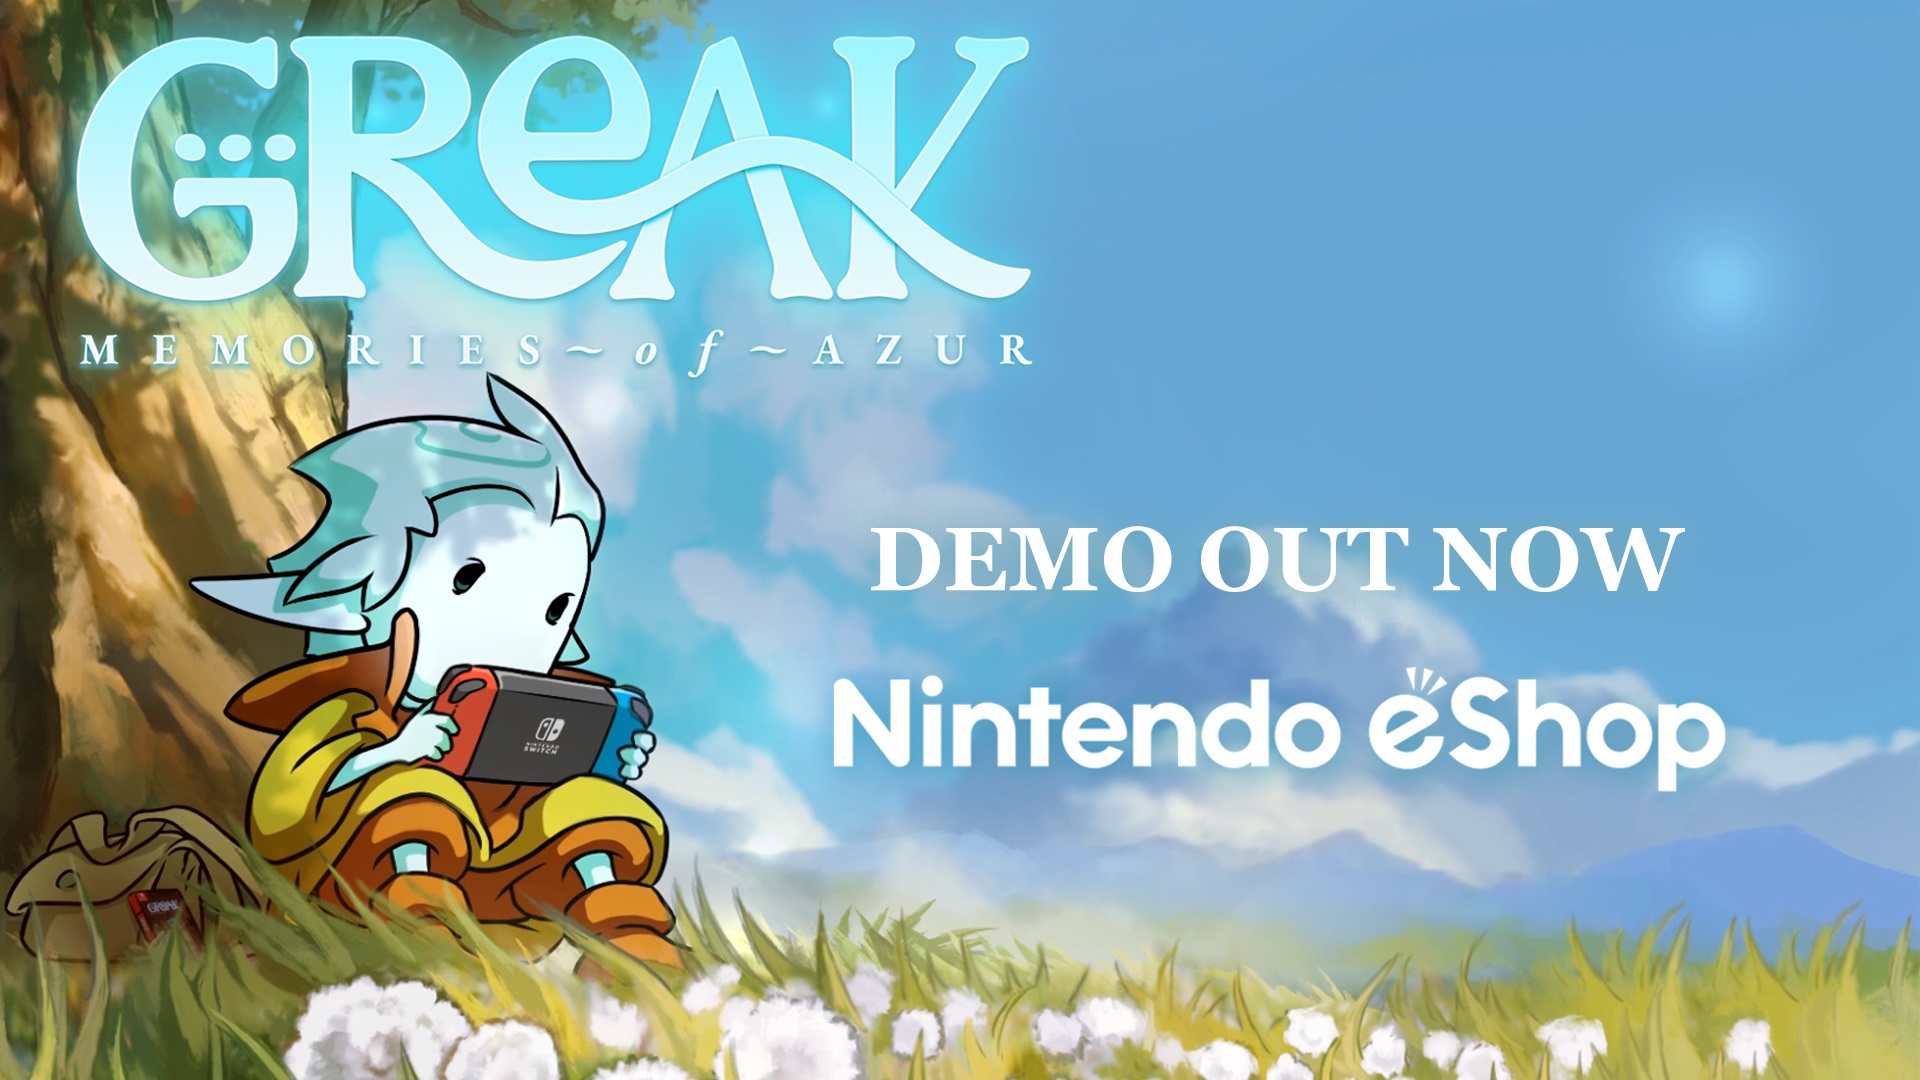 Greak: ຄວາມຊົງຈໍາຂອງ Azur Playable Demo ແມ່ນມີໃຫ້ແລ້ວ